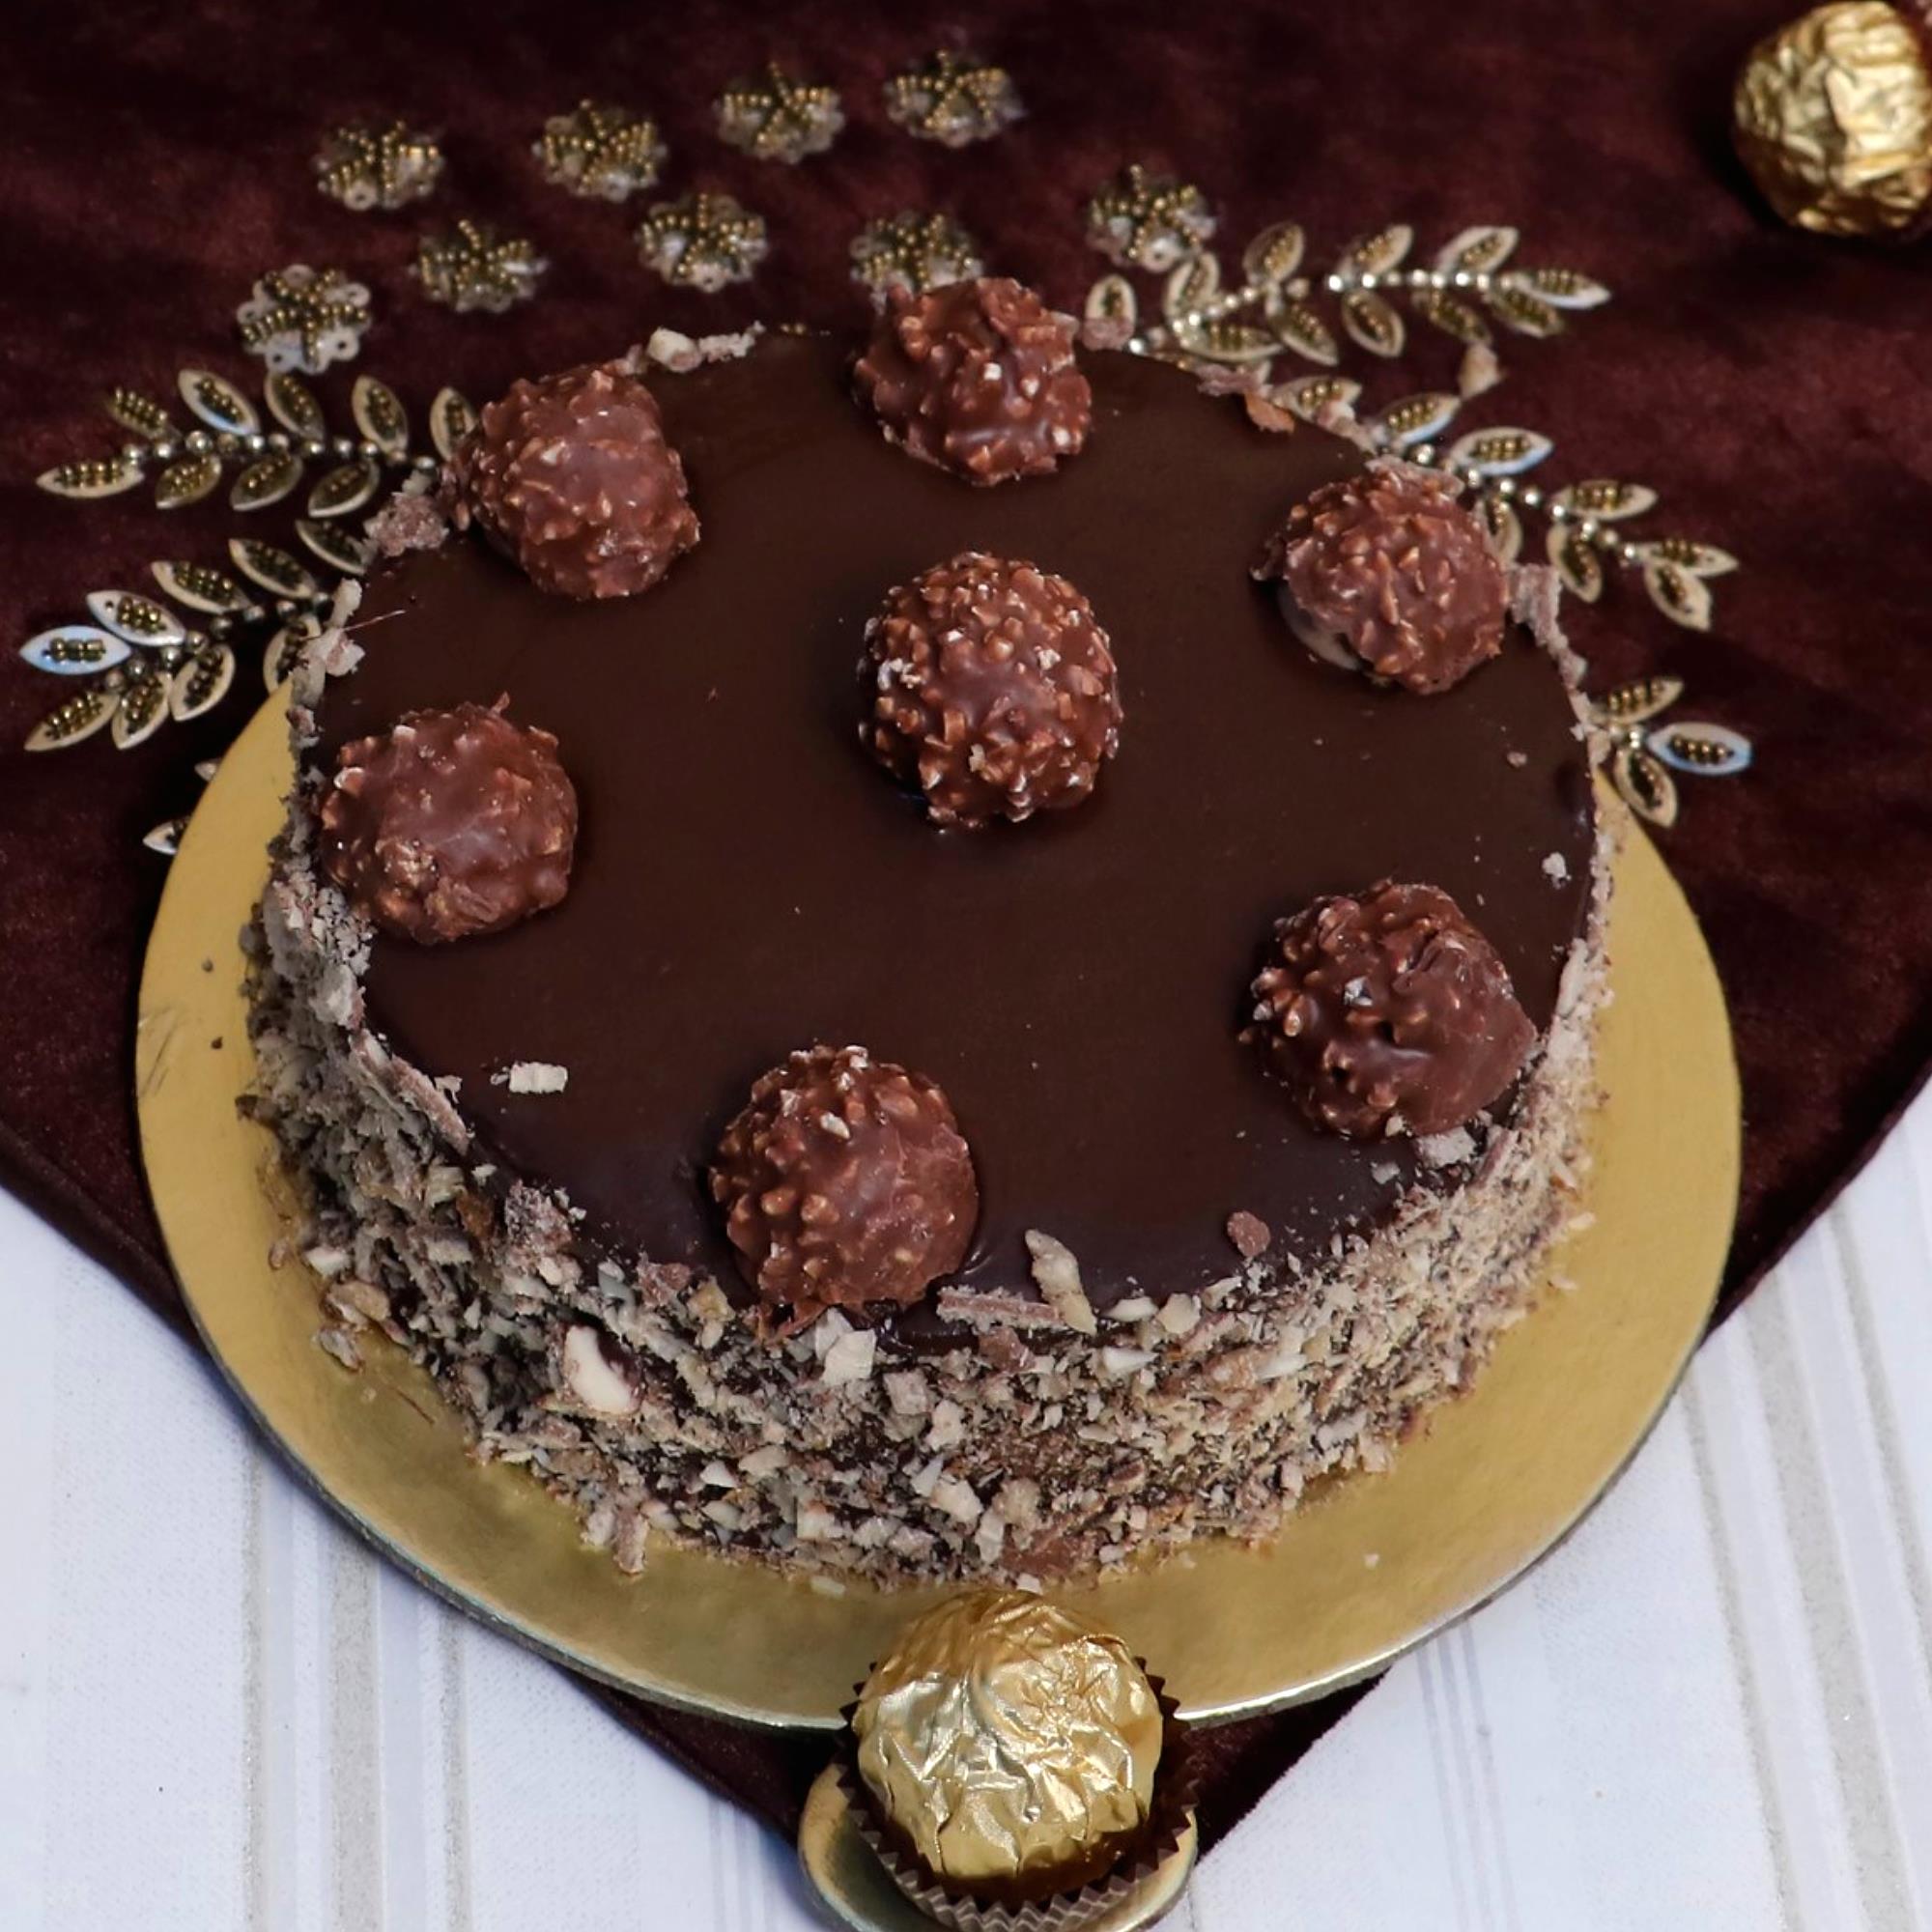 Chocolate & Hazelnut Covered in Nutella - The Cake Box